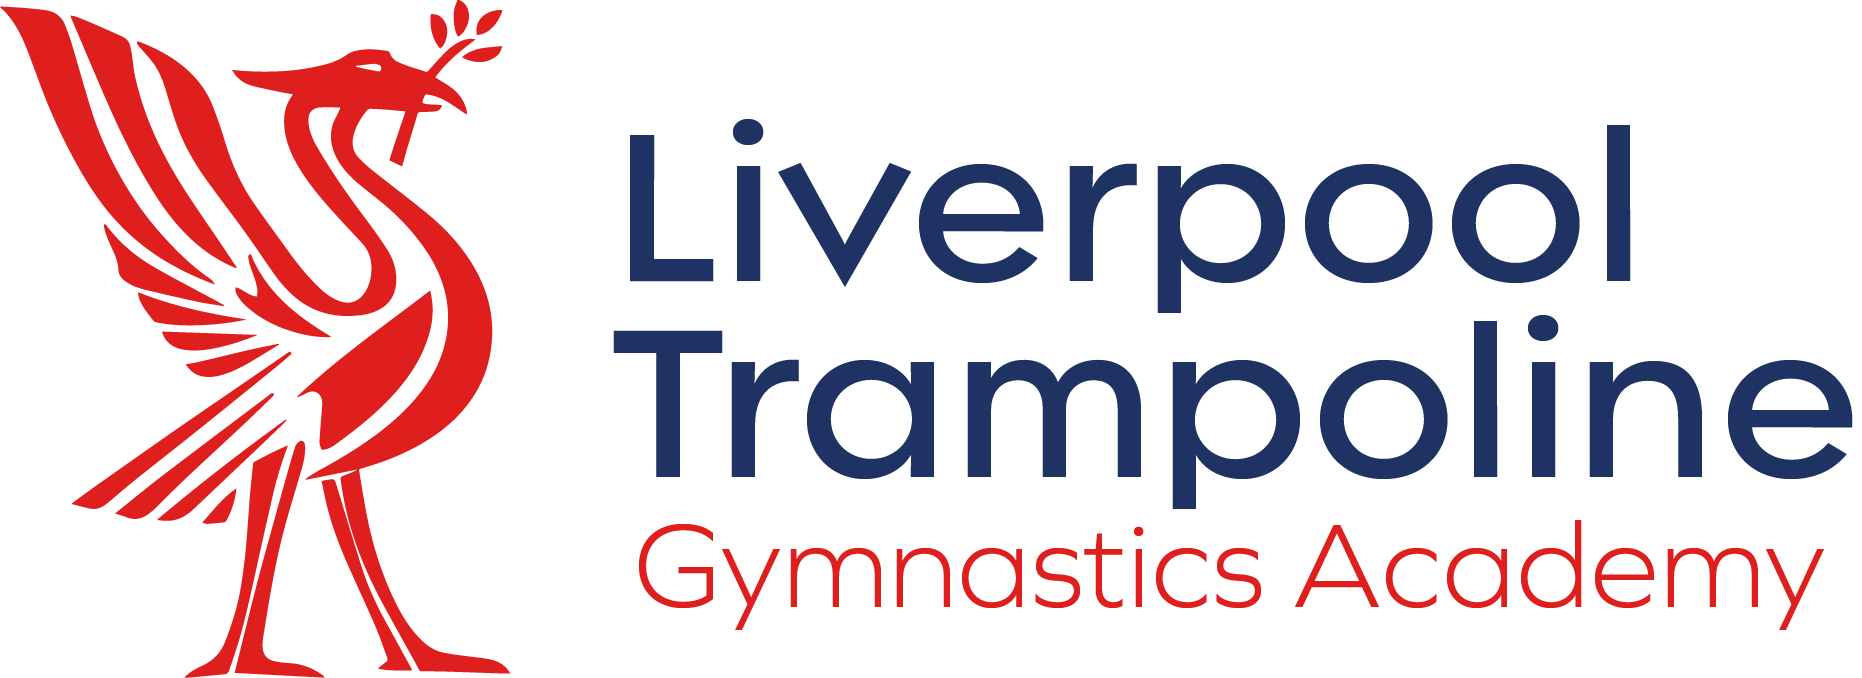 Liverpool Trampoline Gymnastics Academy